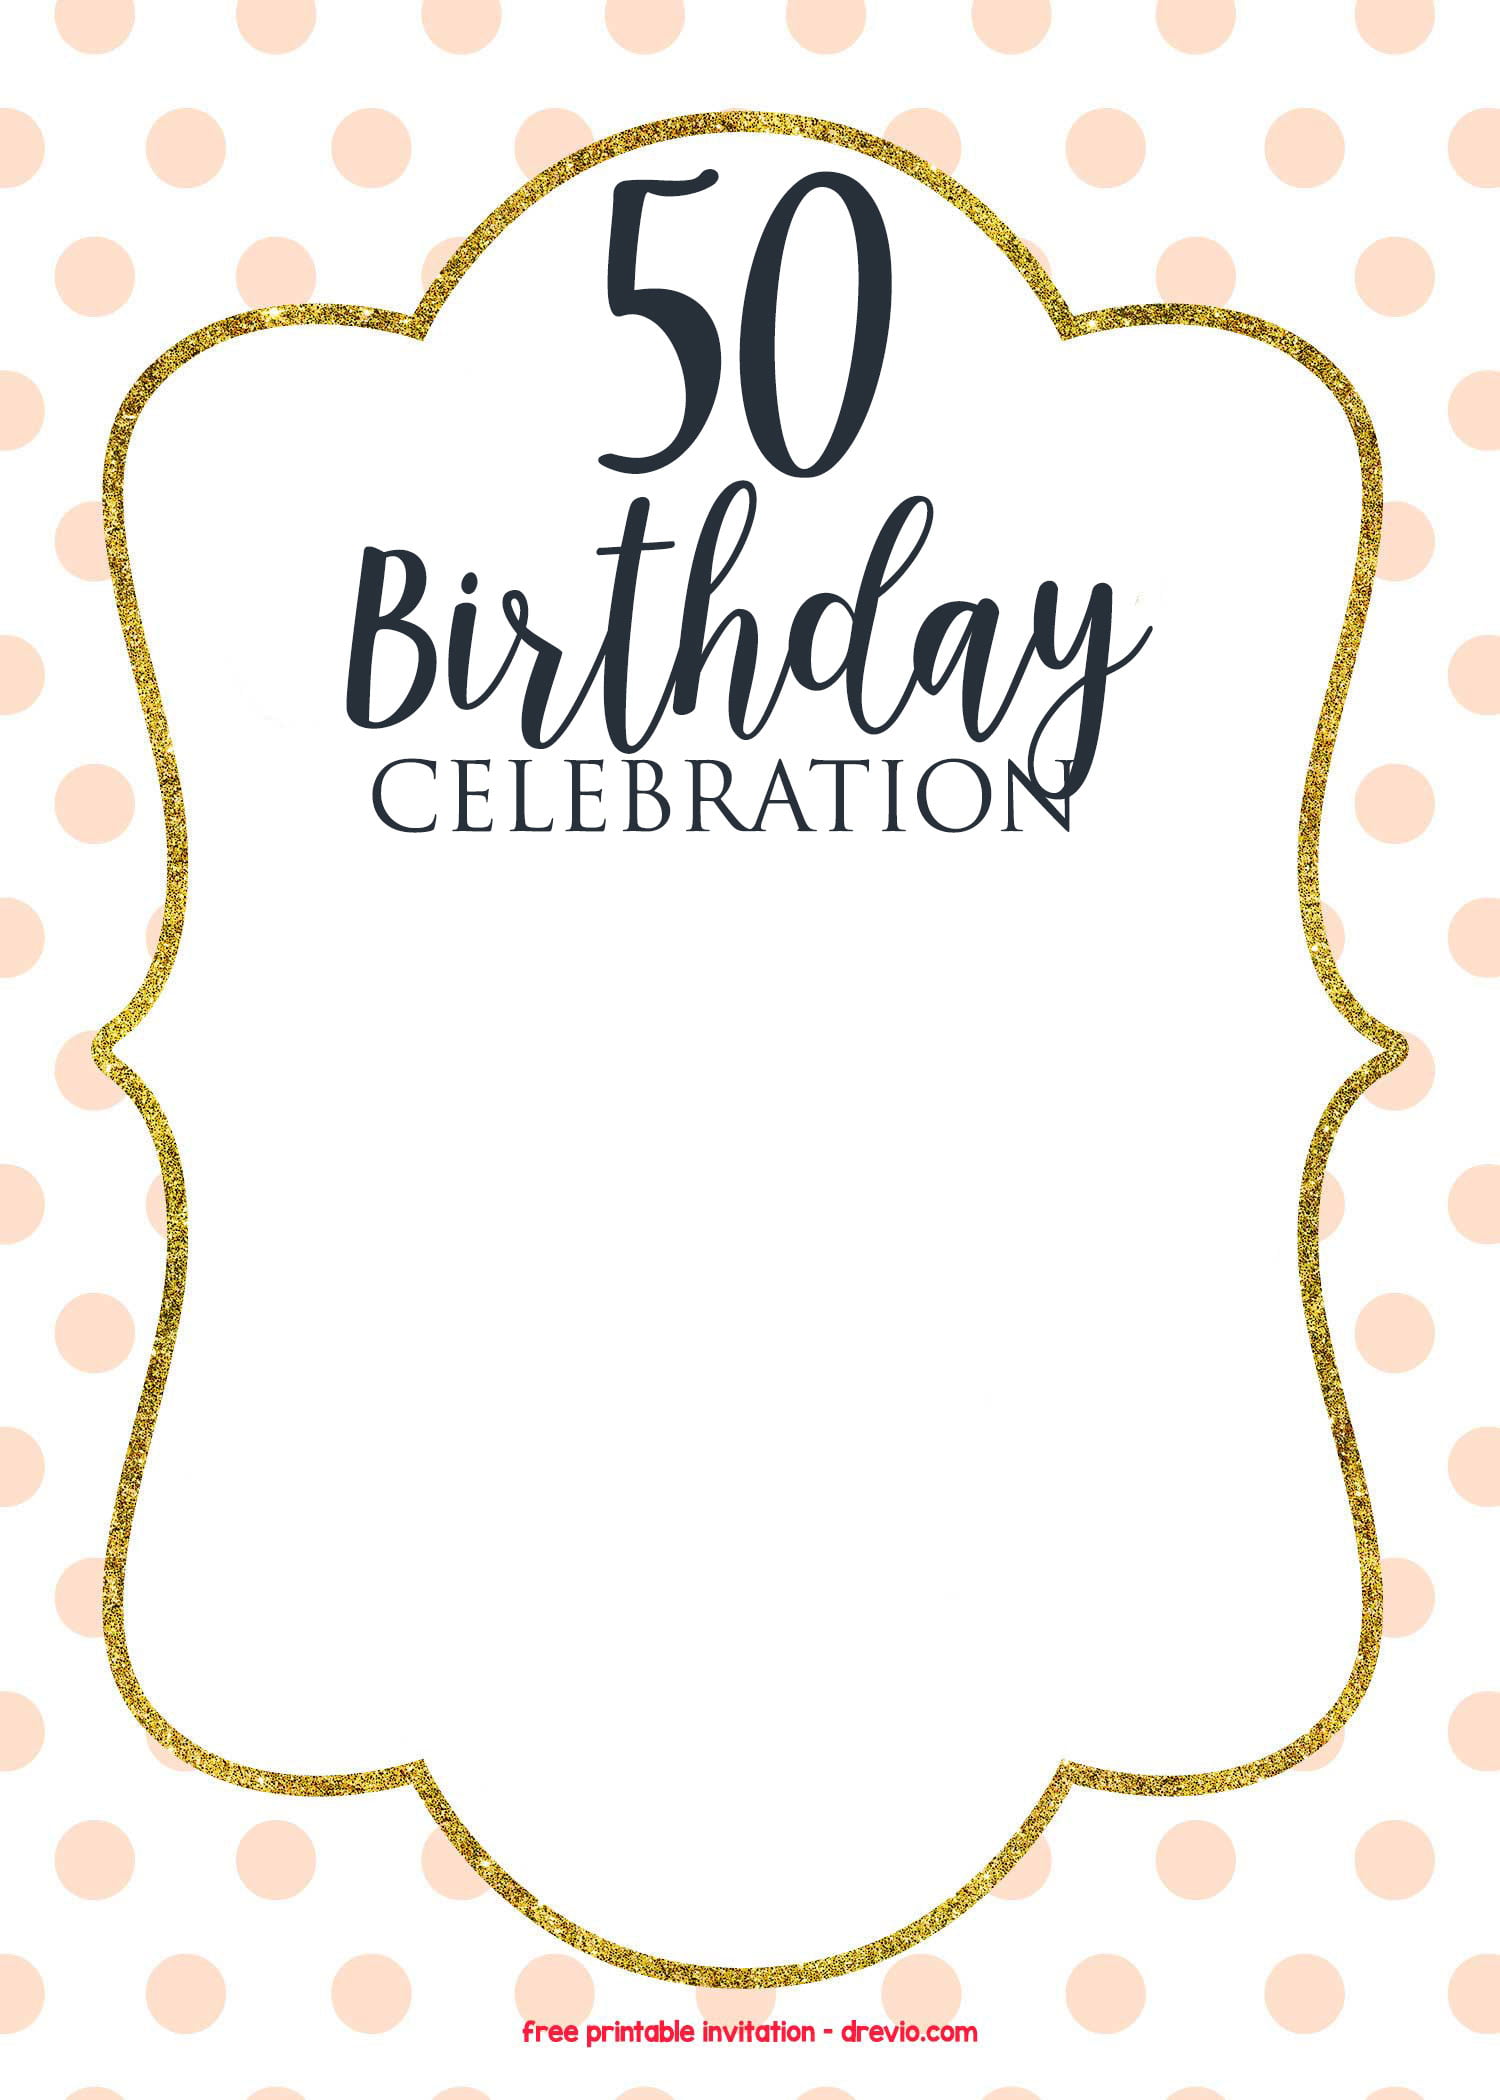 50th-birthday-invitations-online-drevio